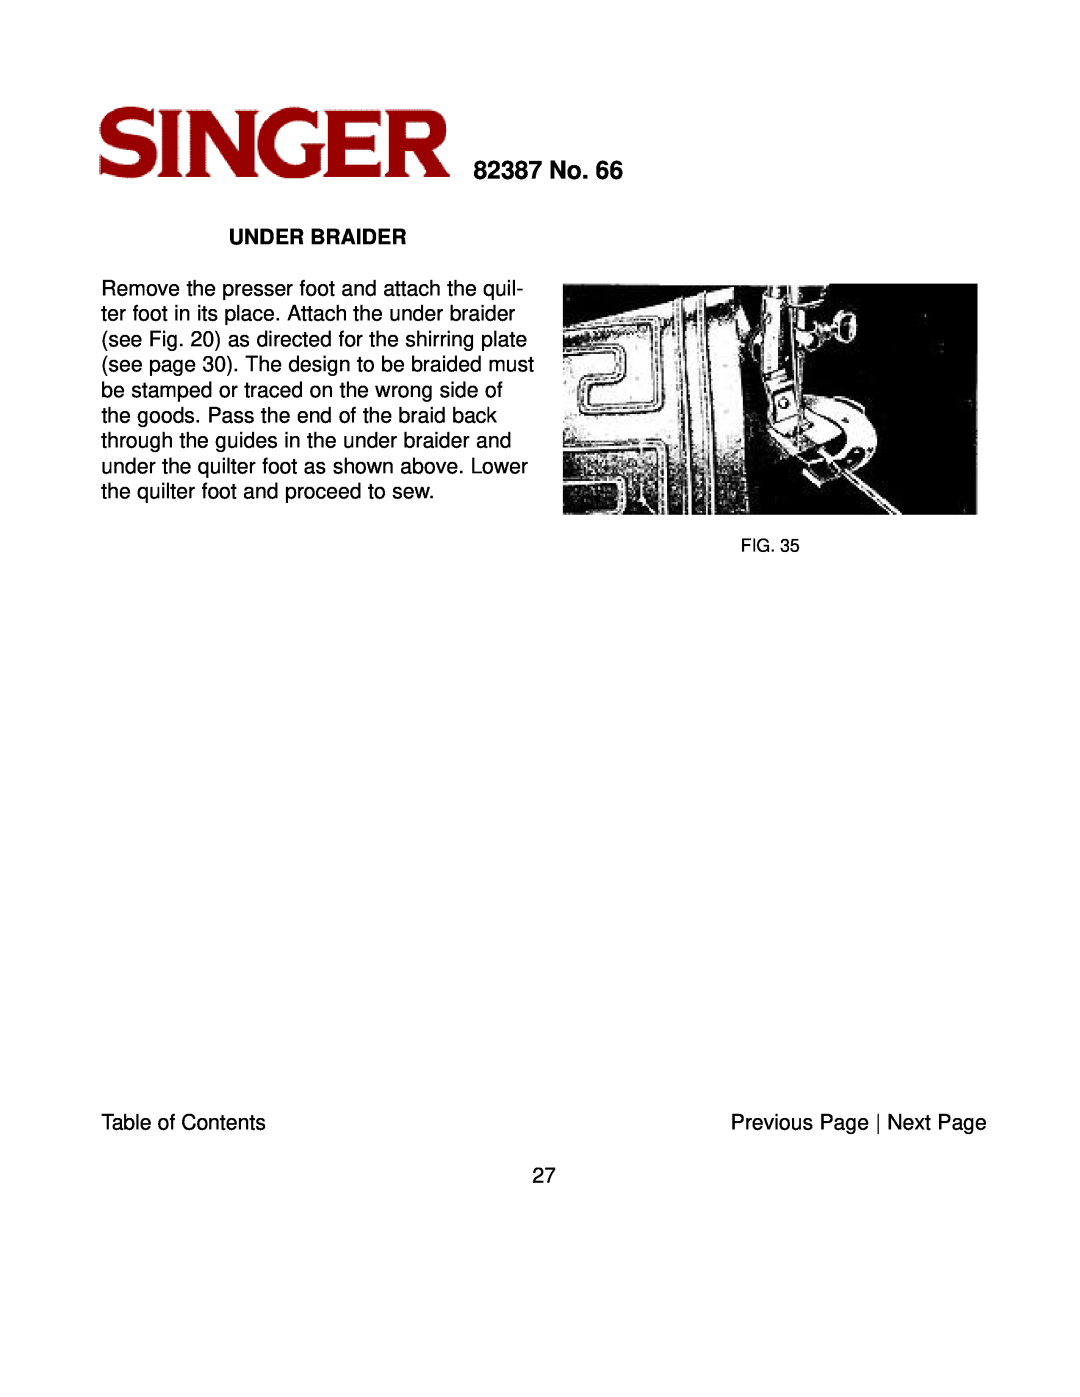 Singer instruction manual Under Braider, 82387 No 